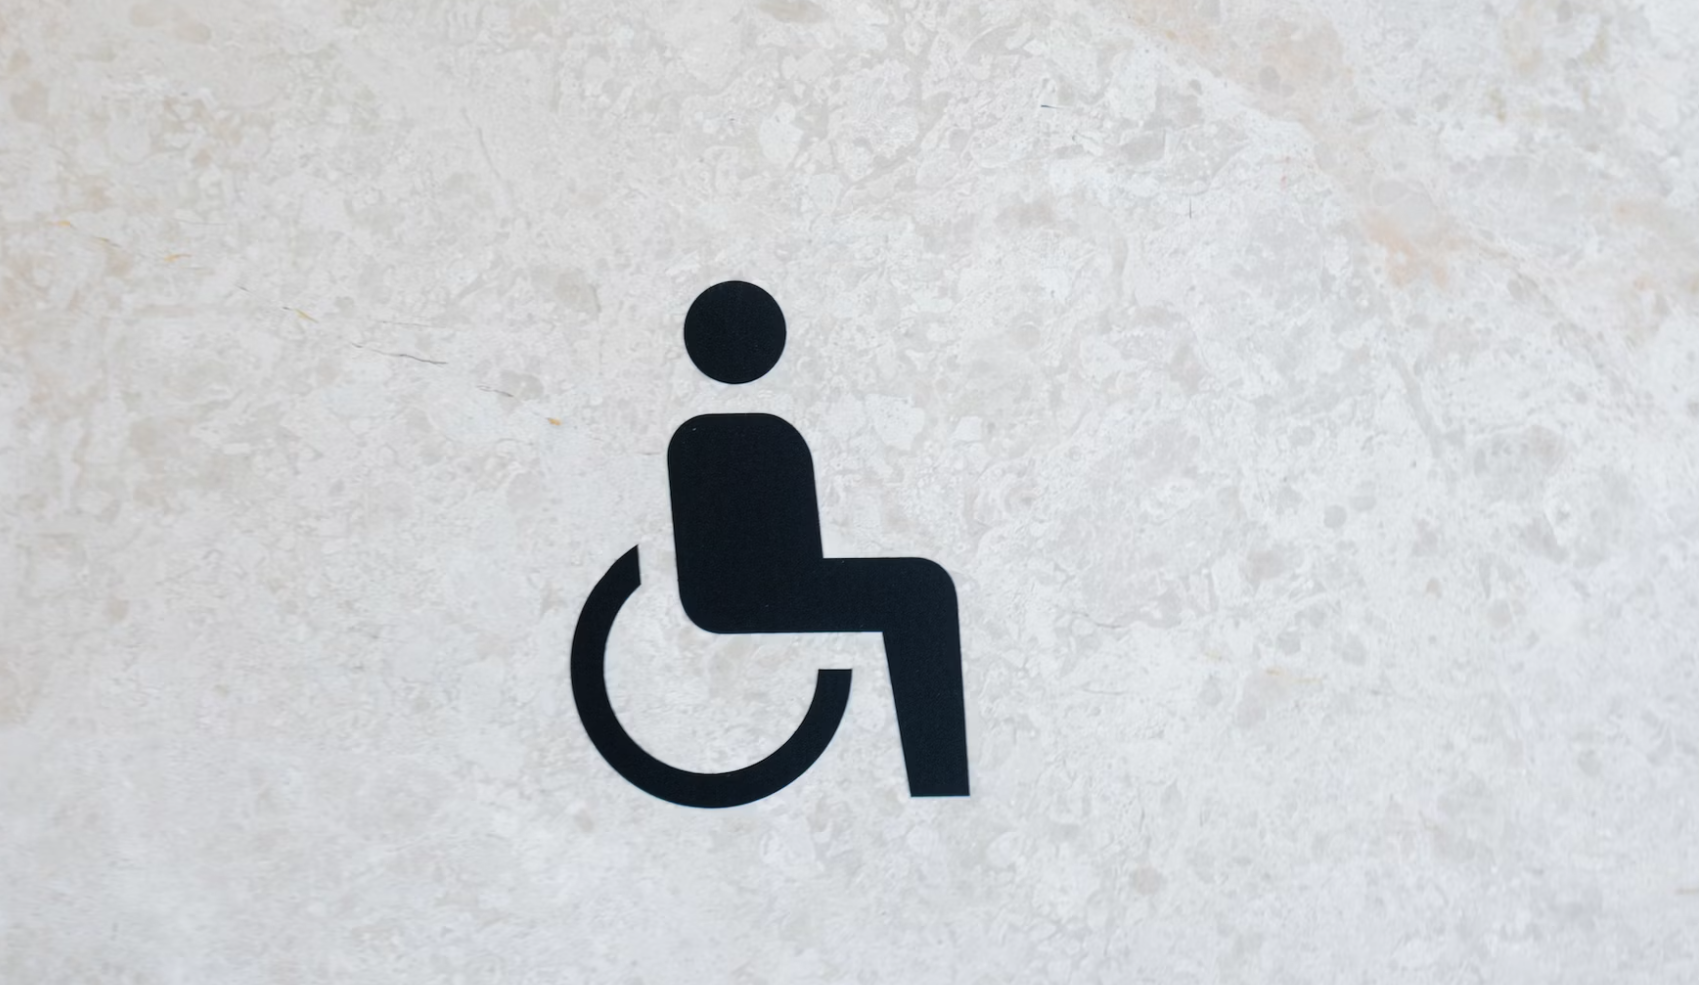 wheelchair sign